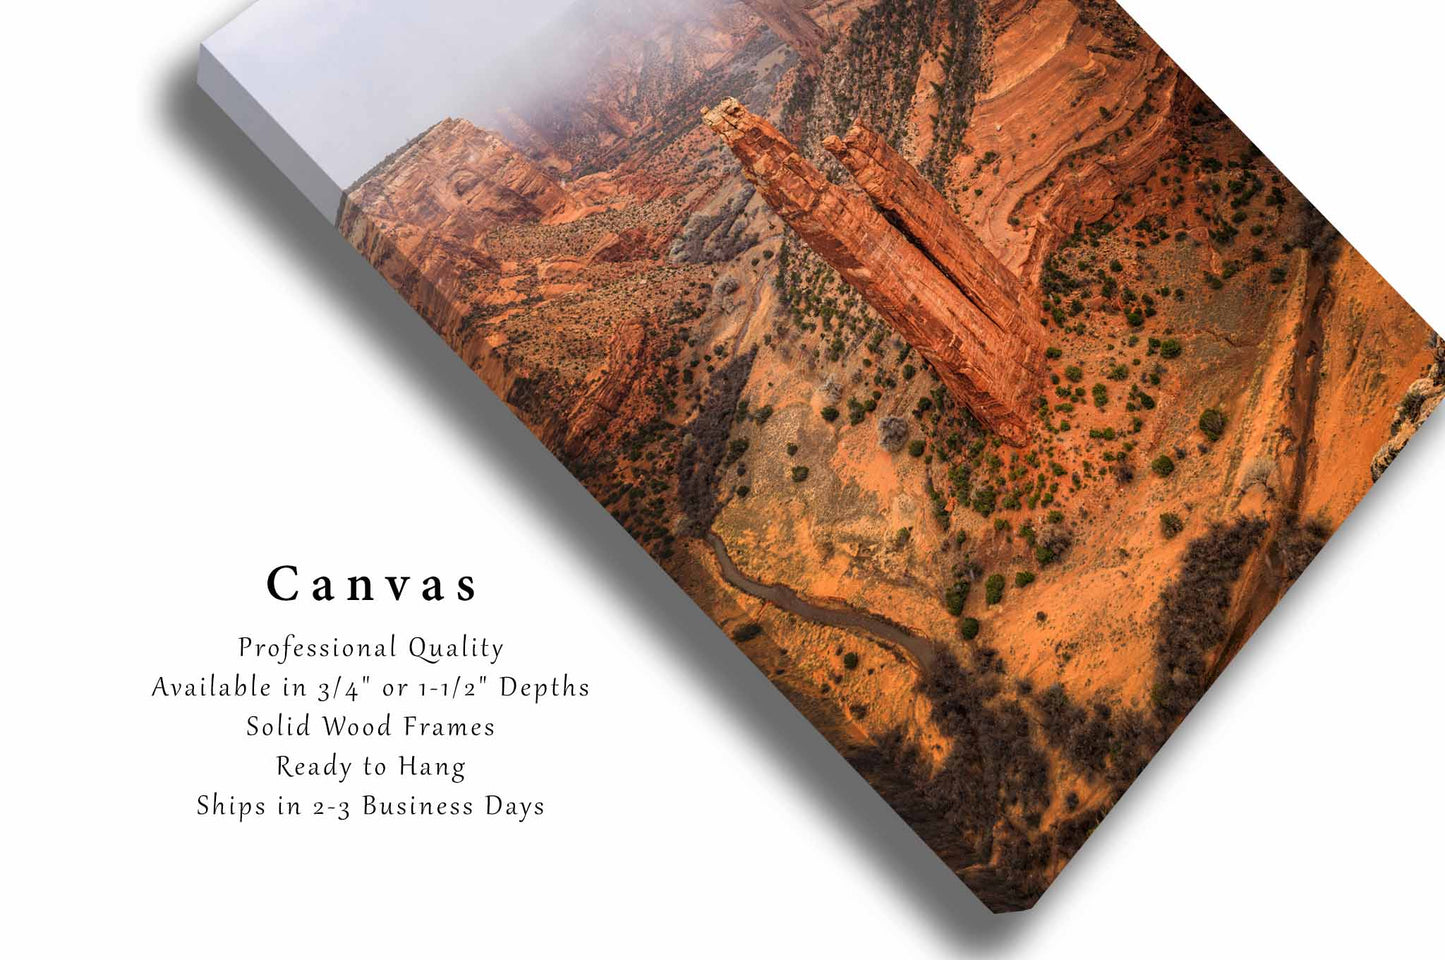 Canyon de Chelly Canvas | Vertical Spider Rock Gallery Wrap | Arizona Photography | Western Wall Art | Nature Decor | Ready to Hang